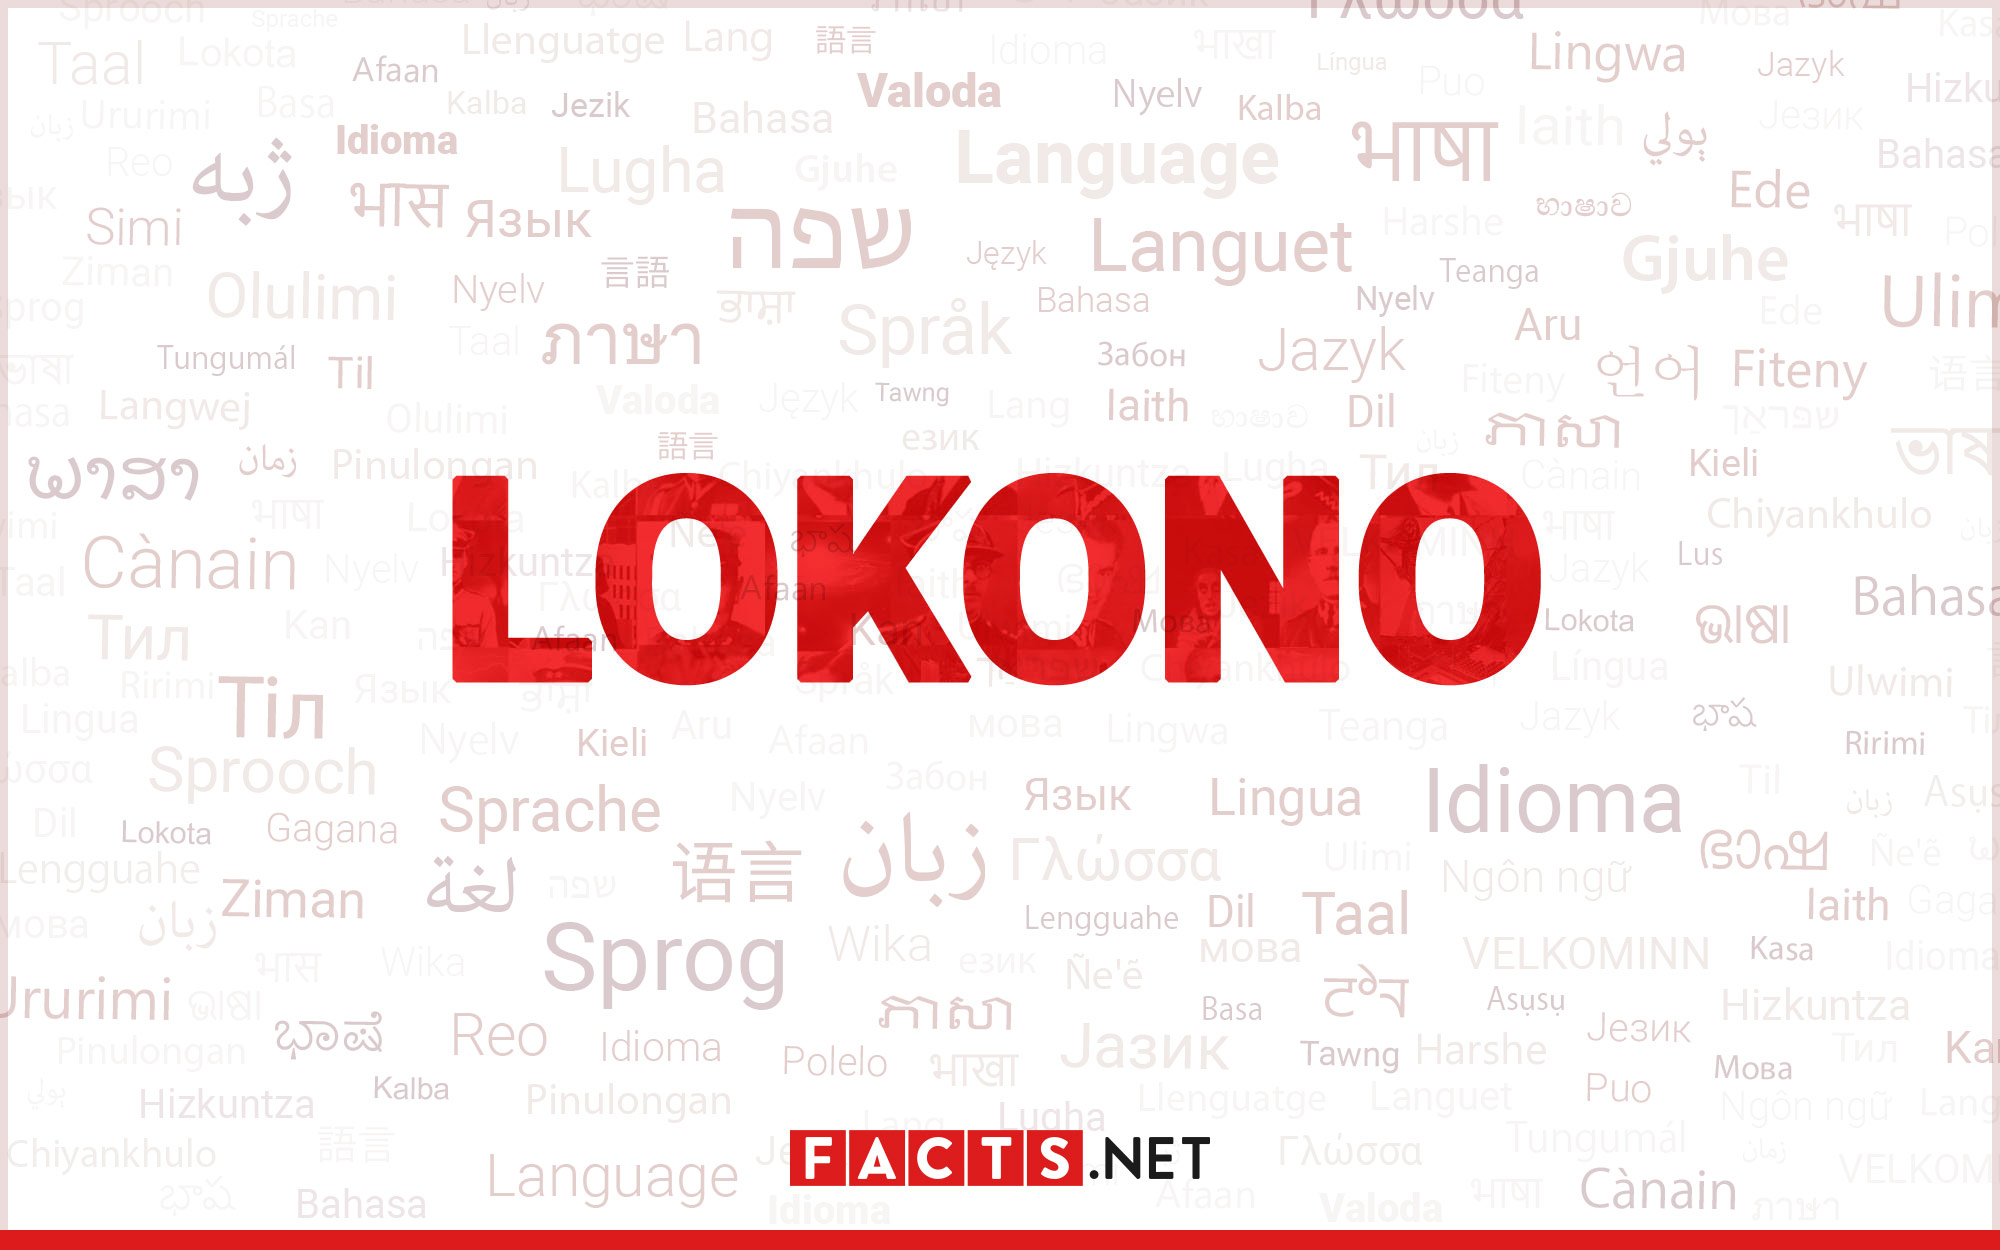 14-astounding-facts-about-lokono